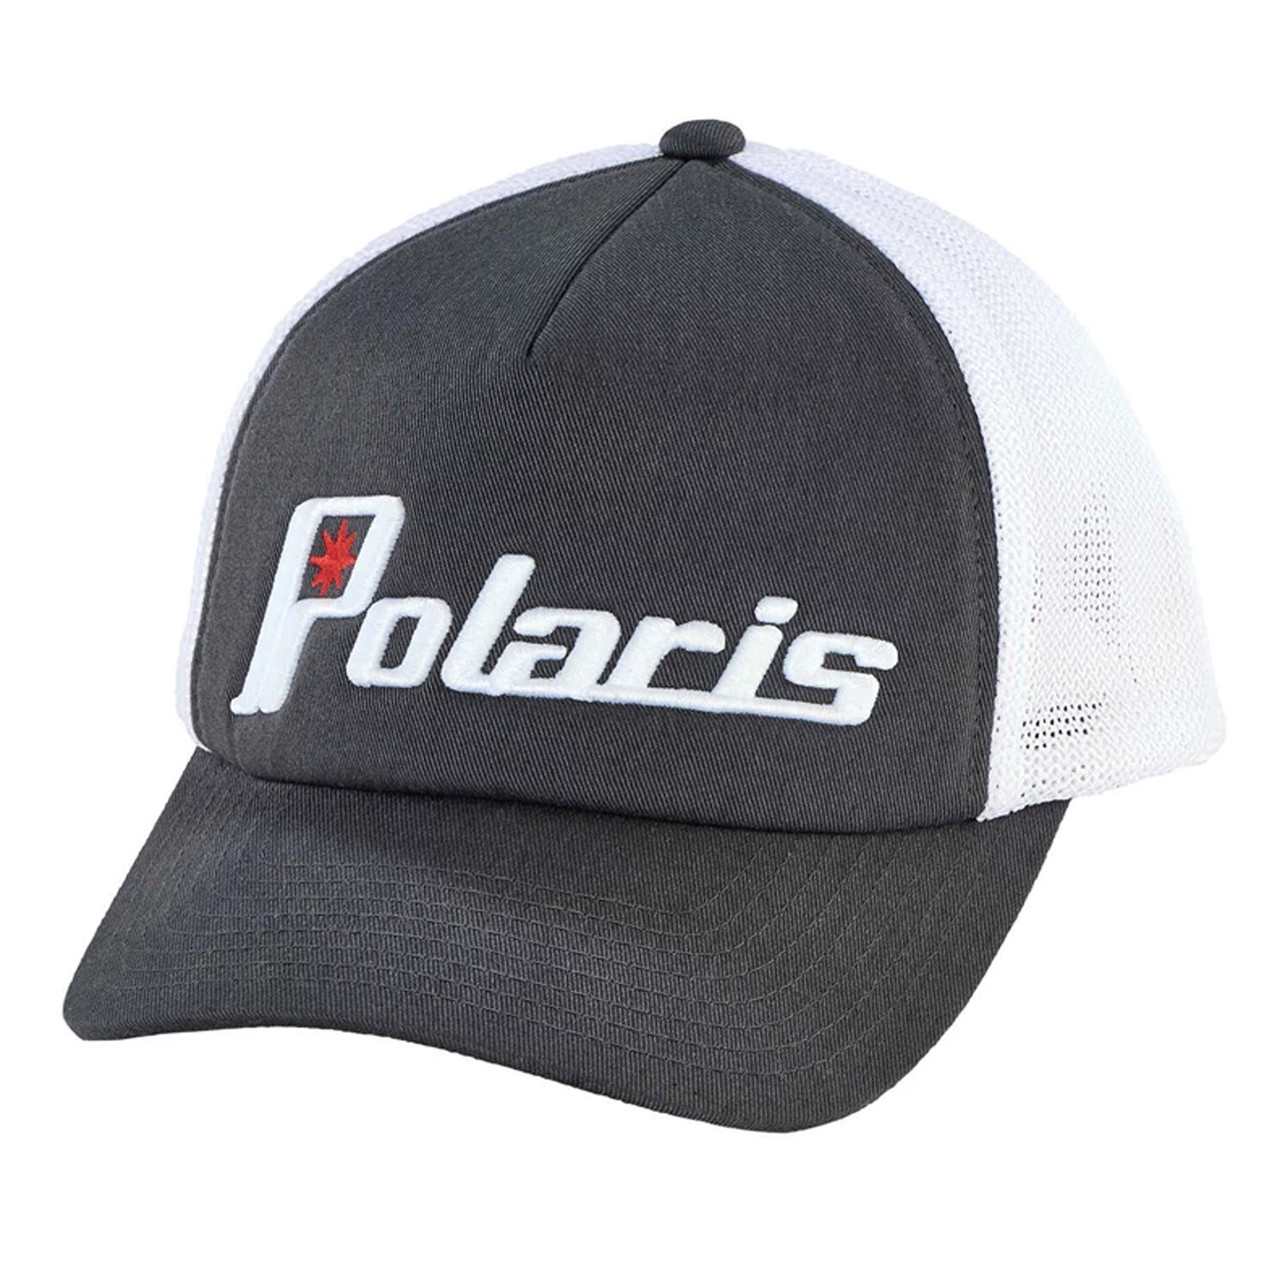 Polaris Snowmobile New OEM, Adult Women's, Adjustable Mesh Snapback Hat, 2868617